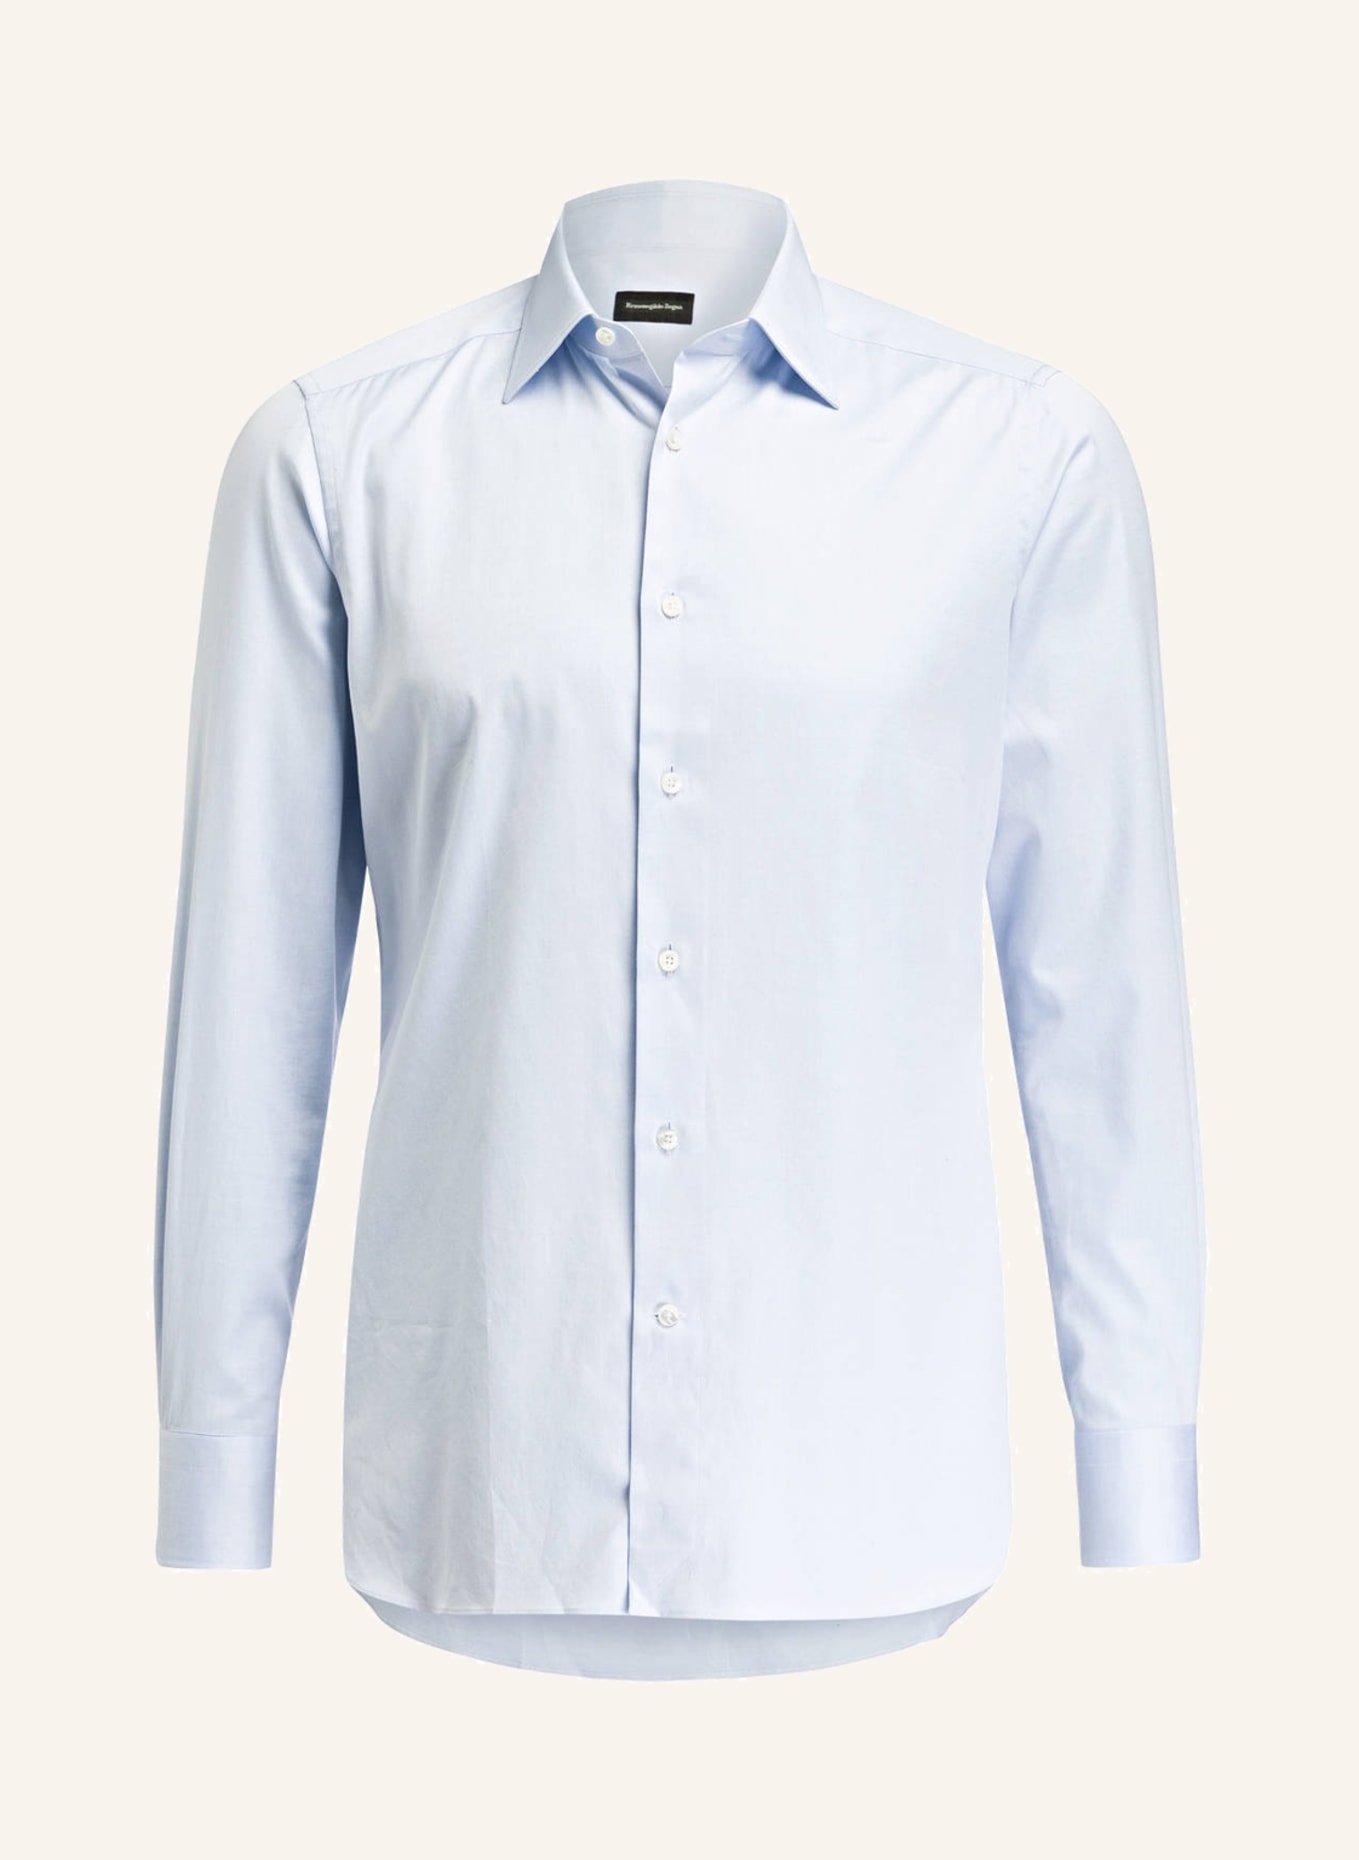 ZEGNA Shirt tailored fit, Color: LIGHT BLUE (Image 1)